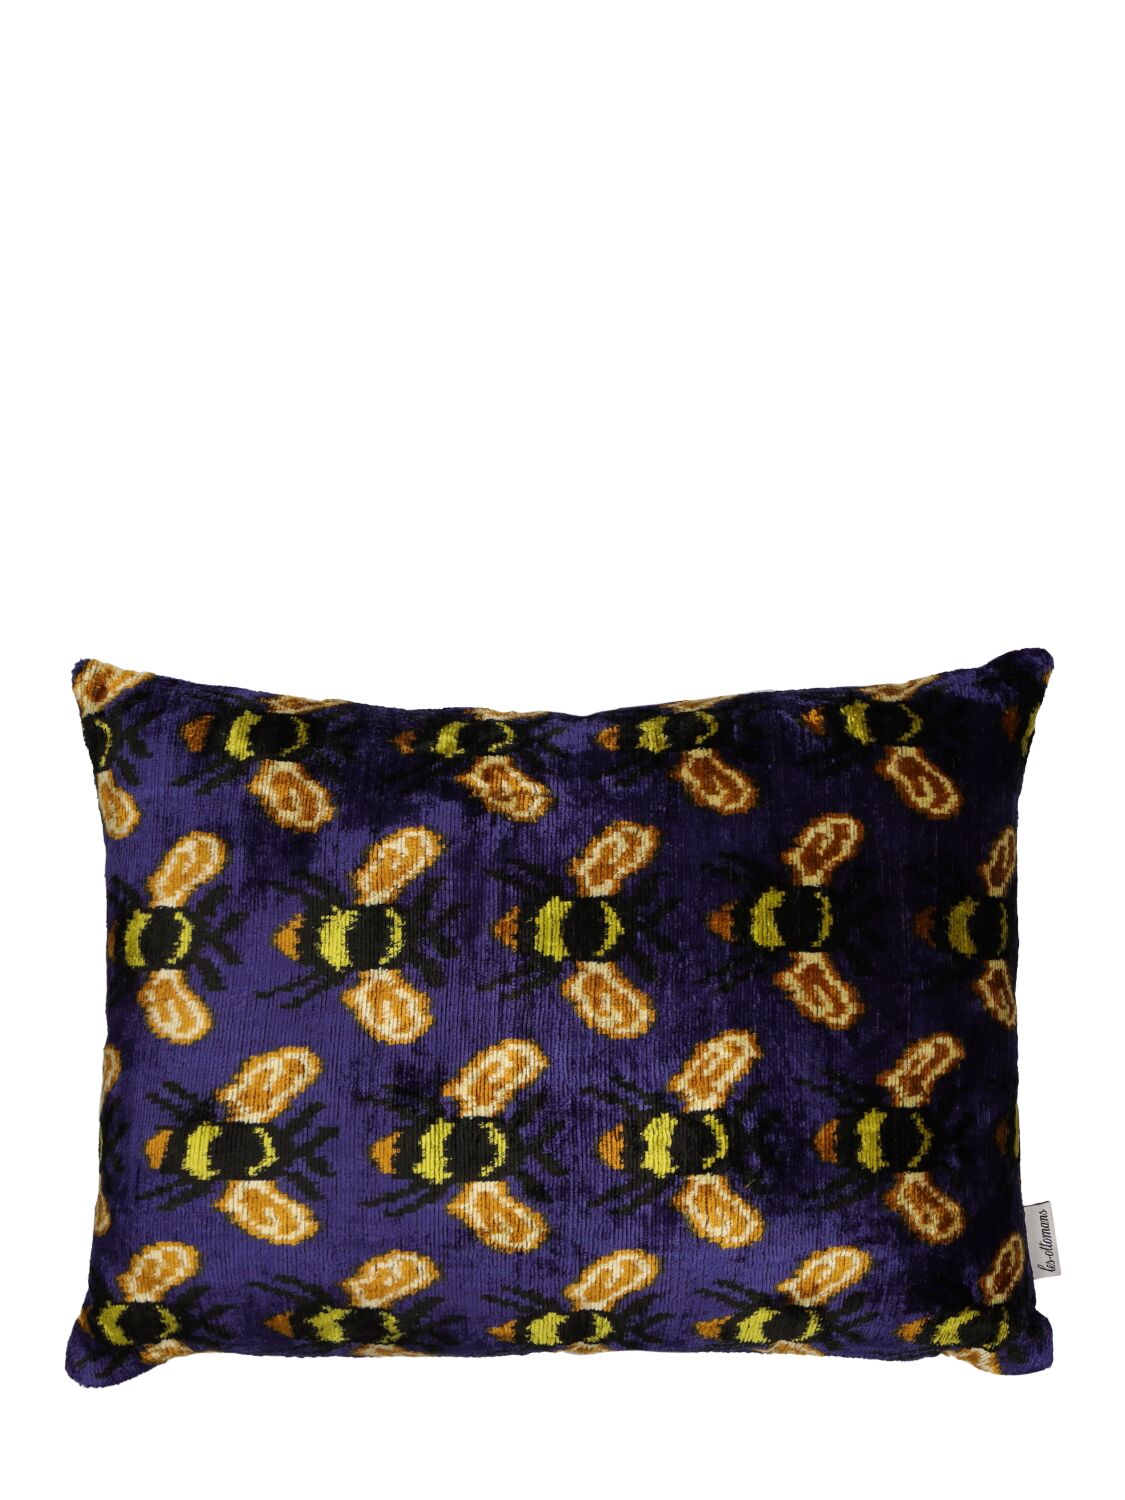 Les-Ottomans Embroidered Palms velvet cushion (50cm x 50cm) - Blue